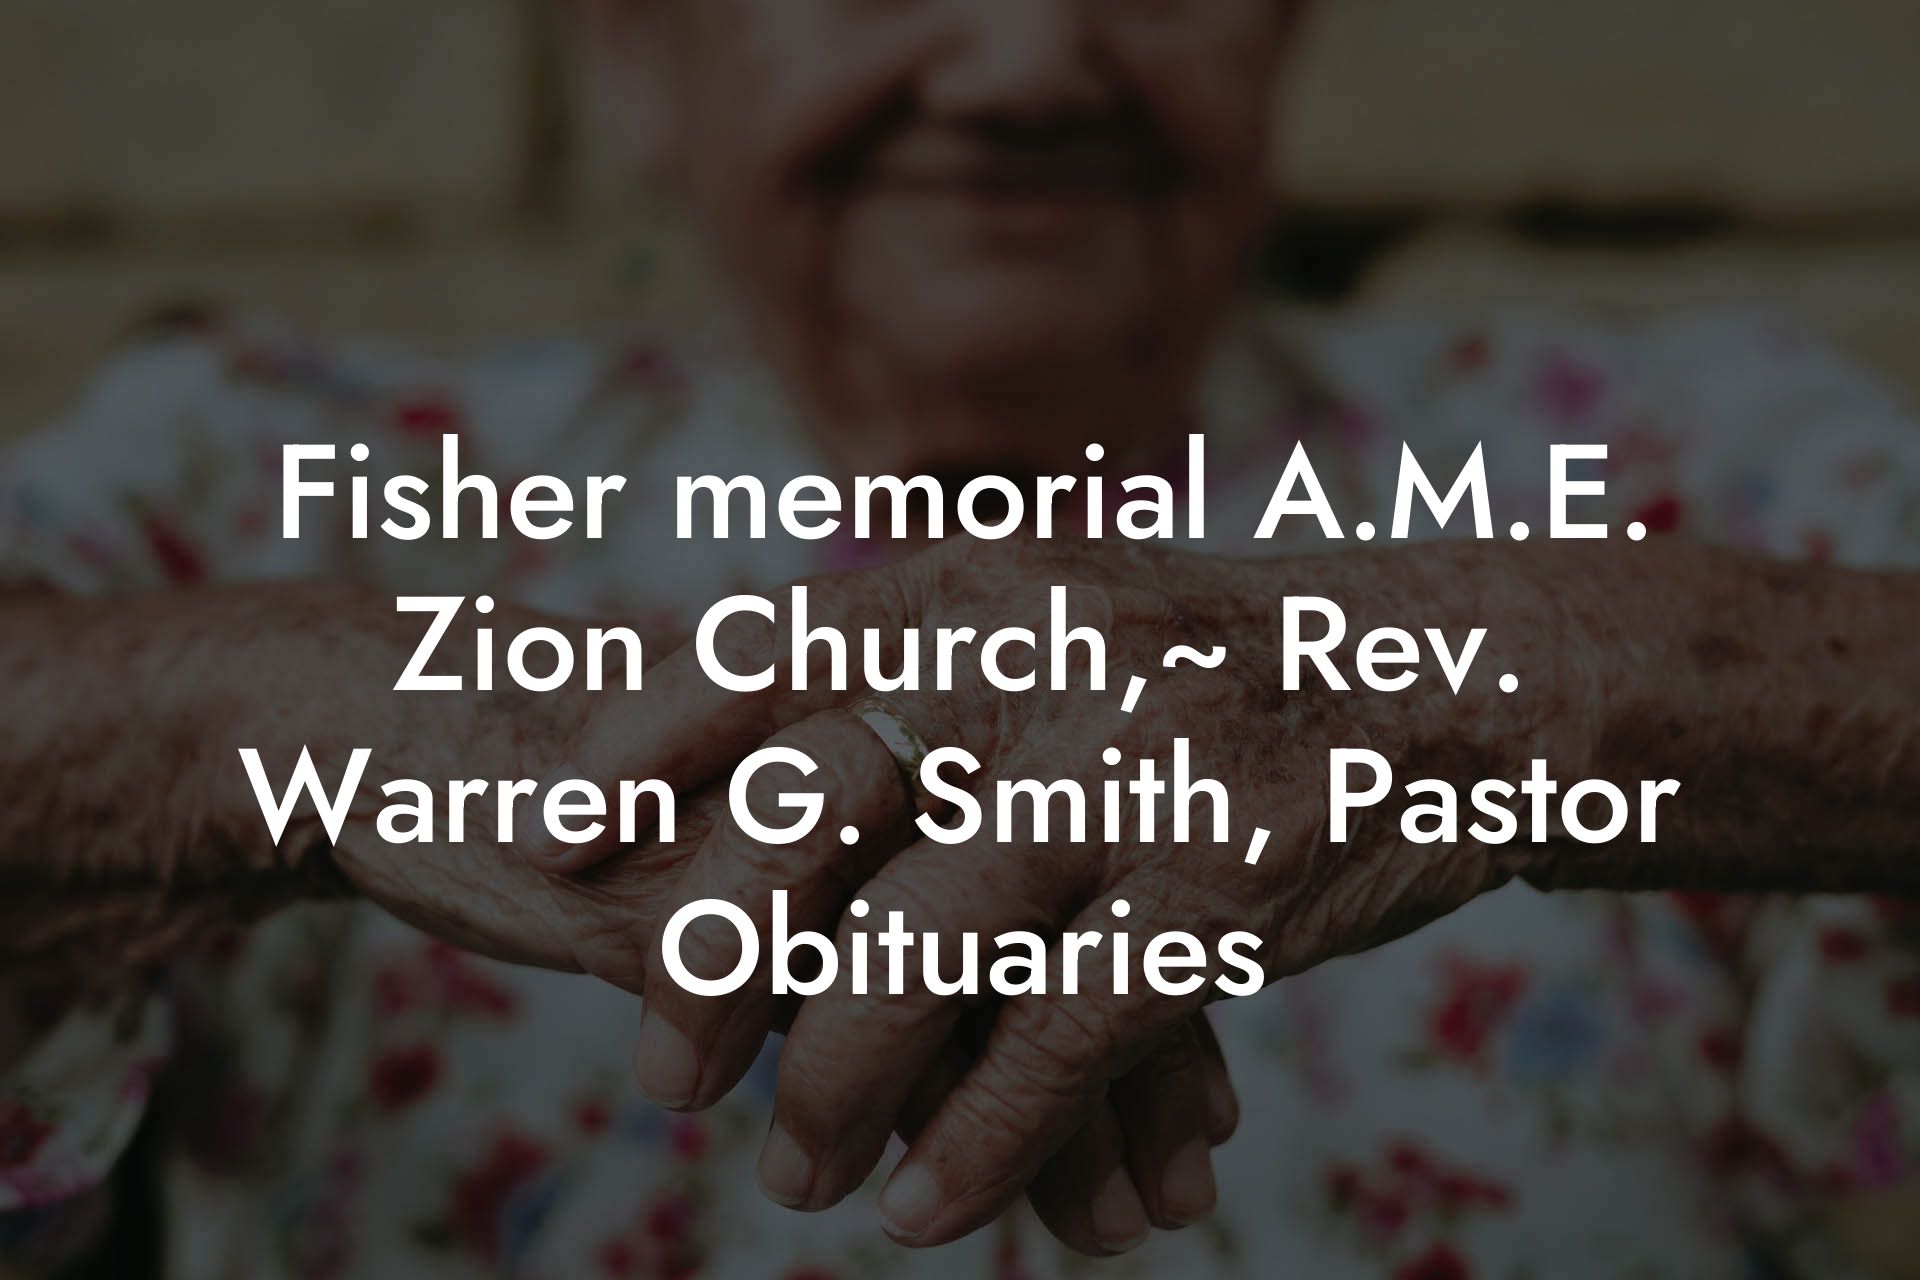 Fisher memorial A.M.E. Zion Church,~ Rev. Warren G. Smith, Pastor Obituaries